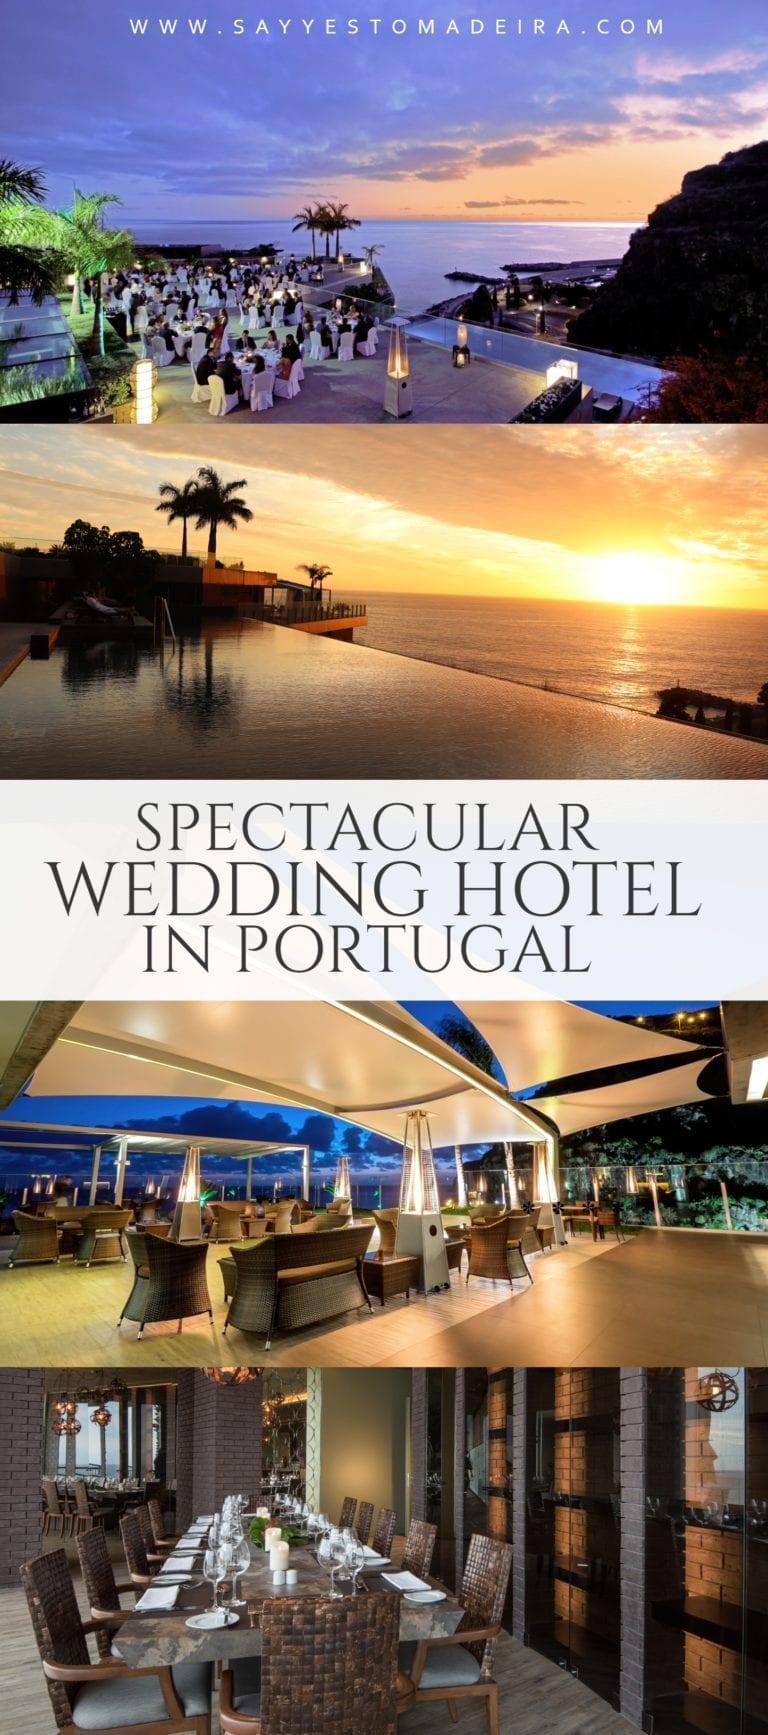 Modern and spectacular destination wedding venues in Portugal: Savoy Saccharum | Najpiękniejsze miejsca na ślub w Portugalii #wedding #weddingvenue #modern #hotel #destinationwedding #portugal #calheta